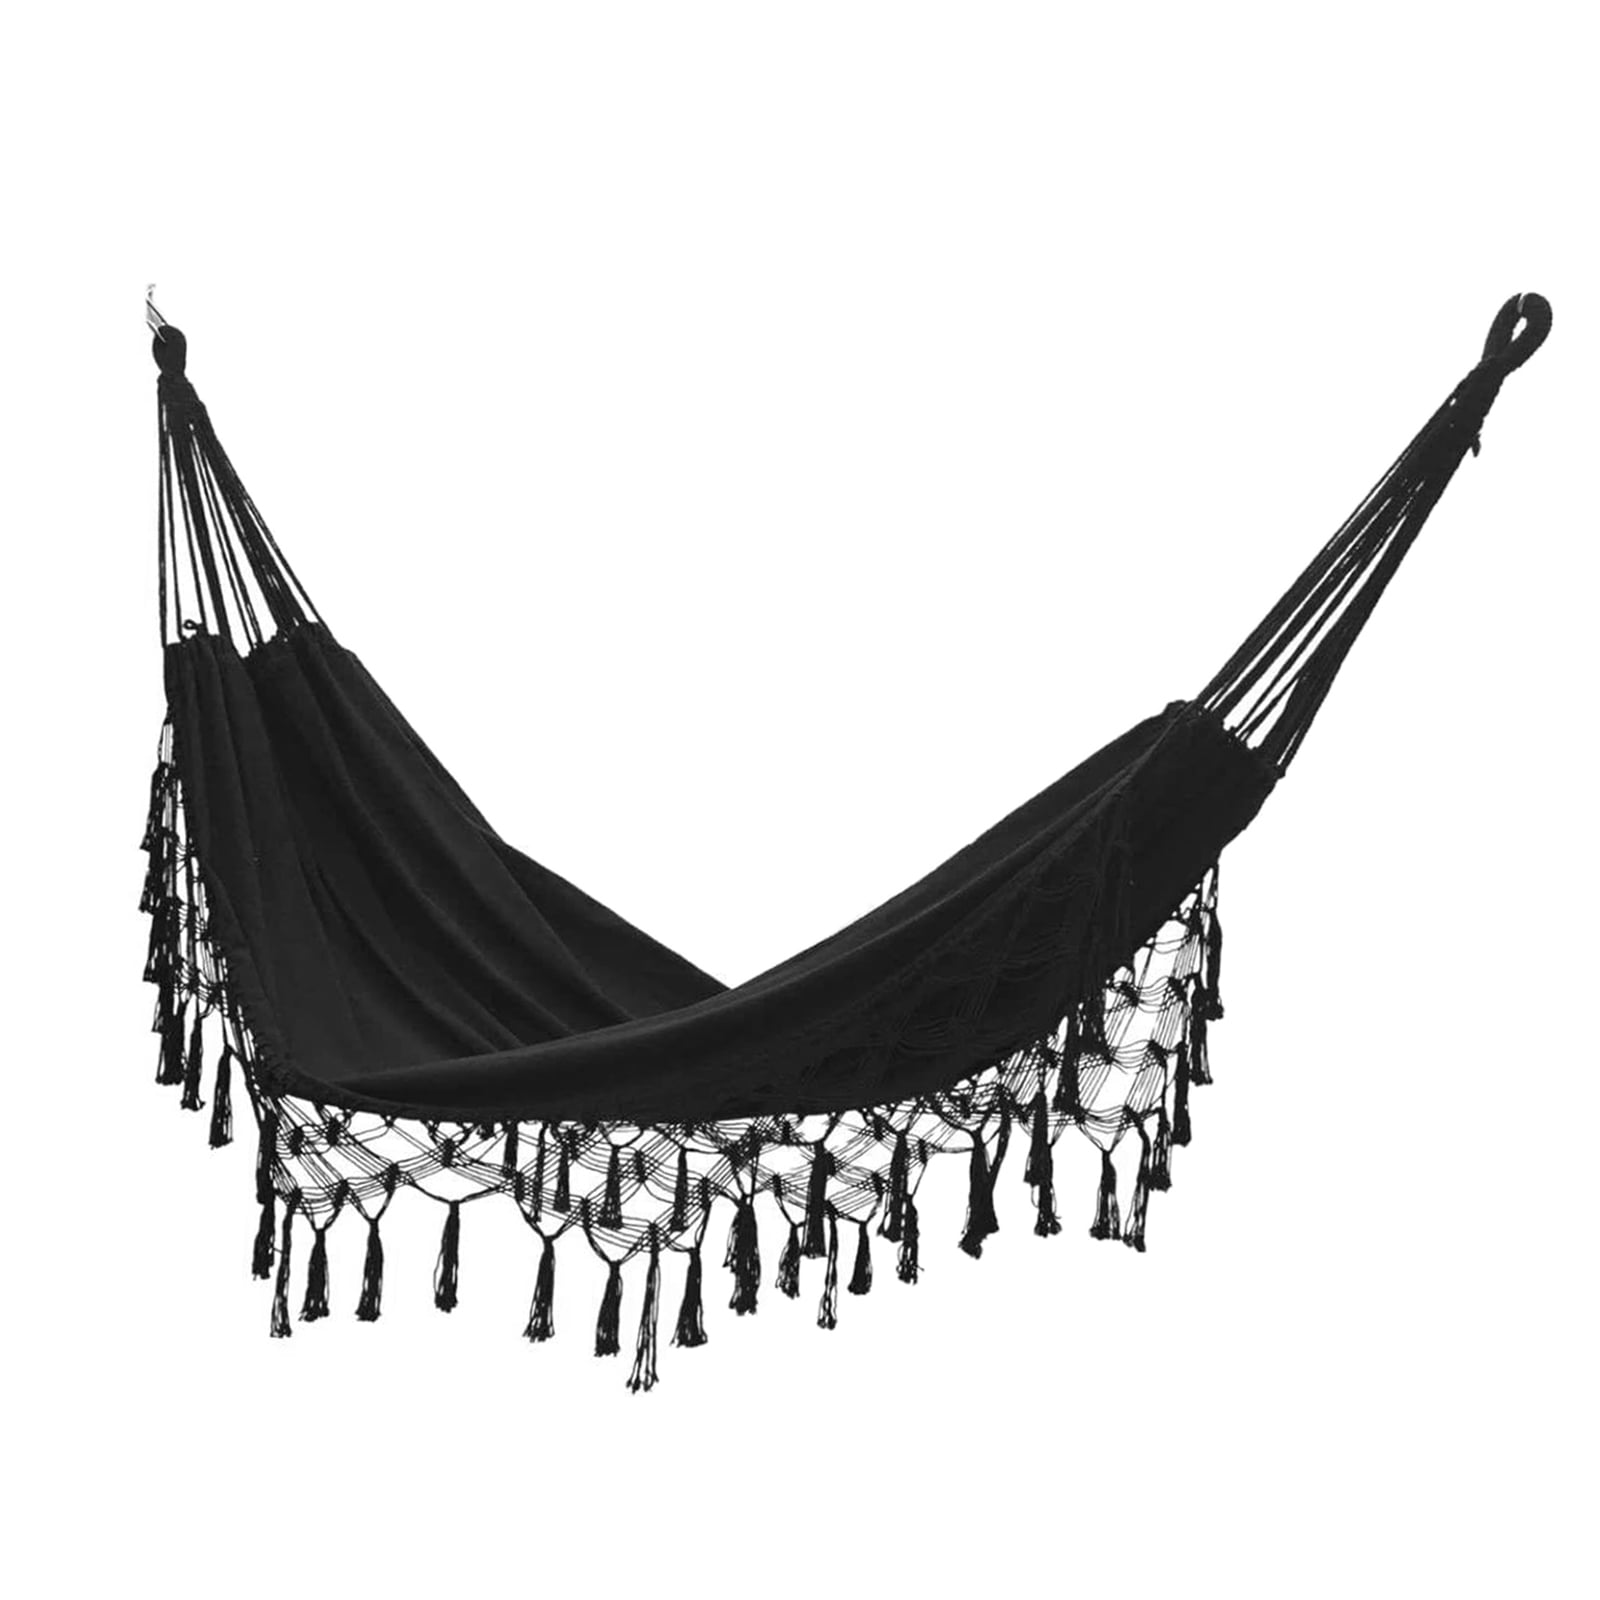 200x150CM 2 Person Hammock Swing Net Chair Boho Brazilian Macrame Luxury Comfortable Foldable